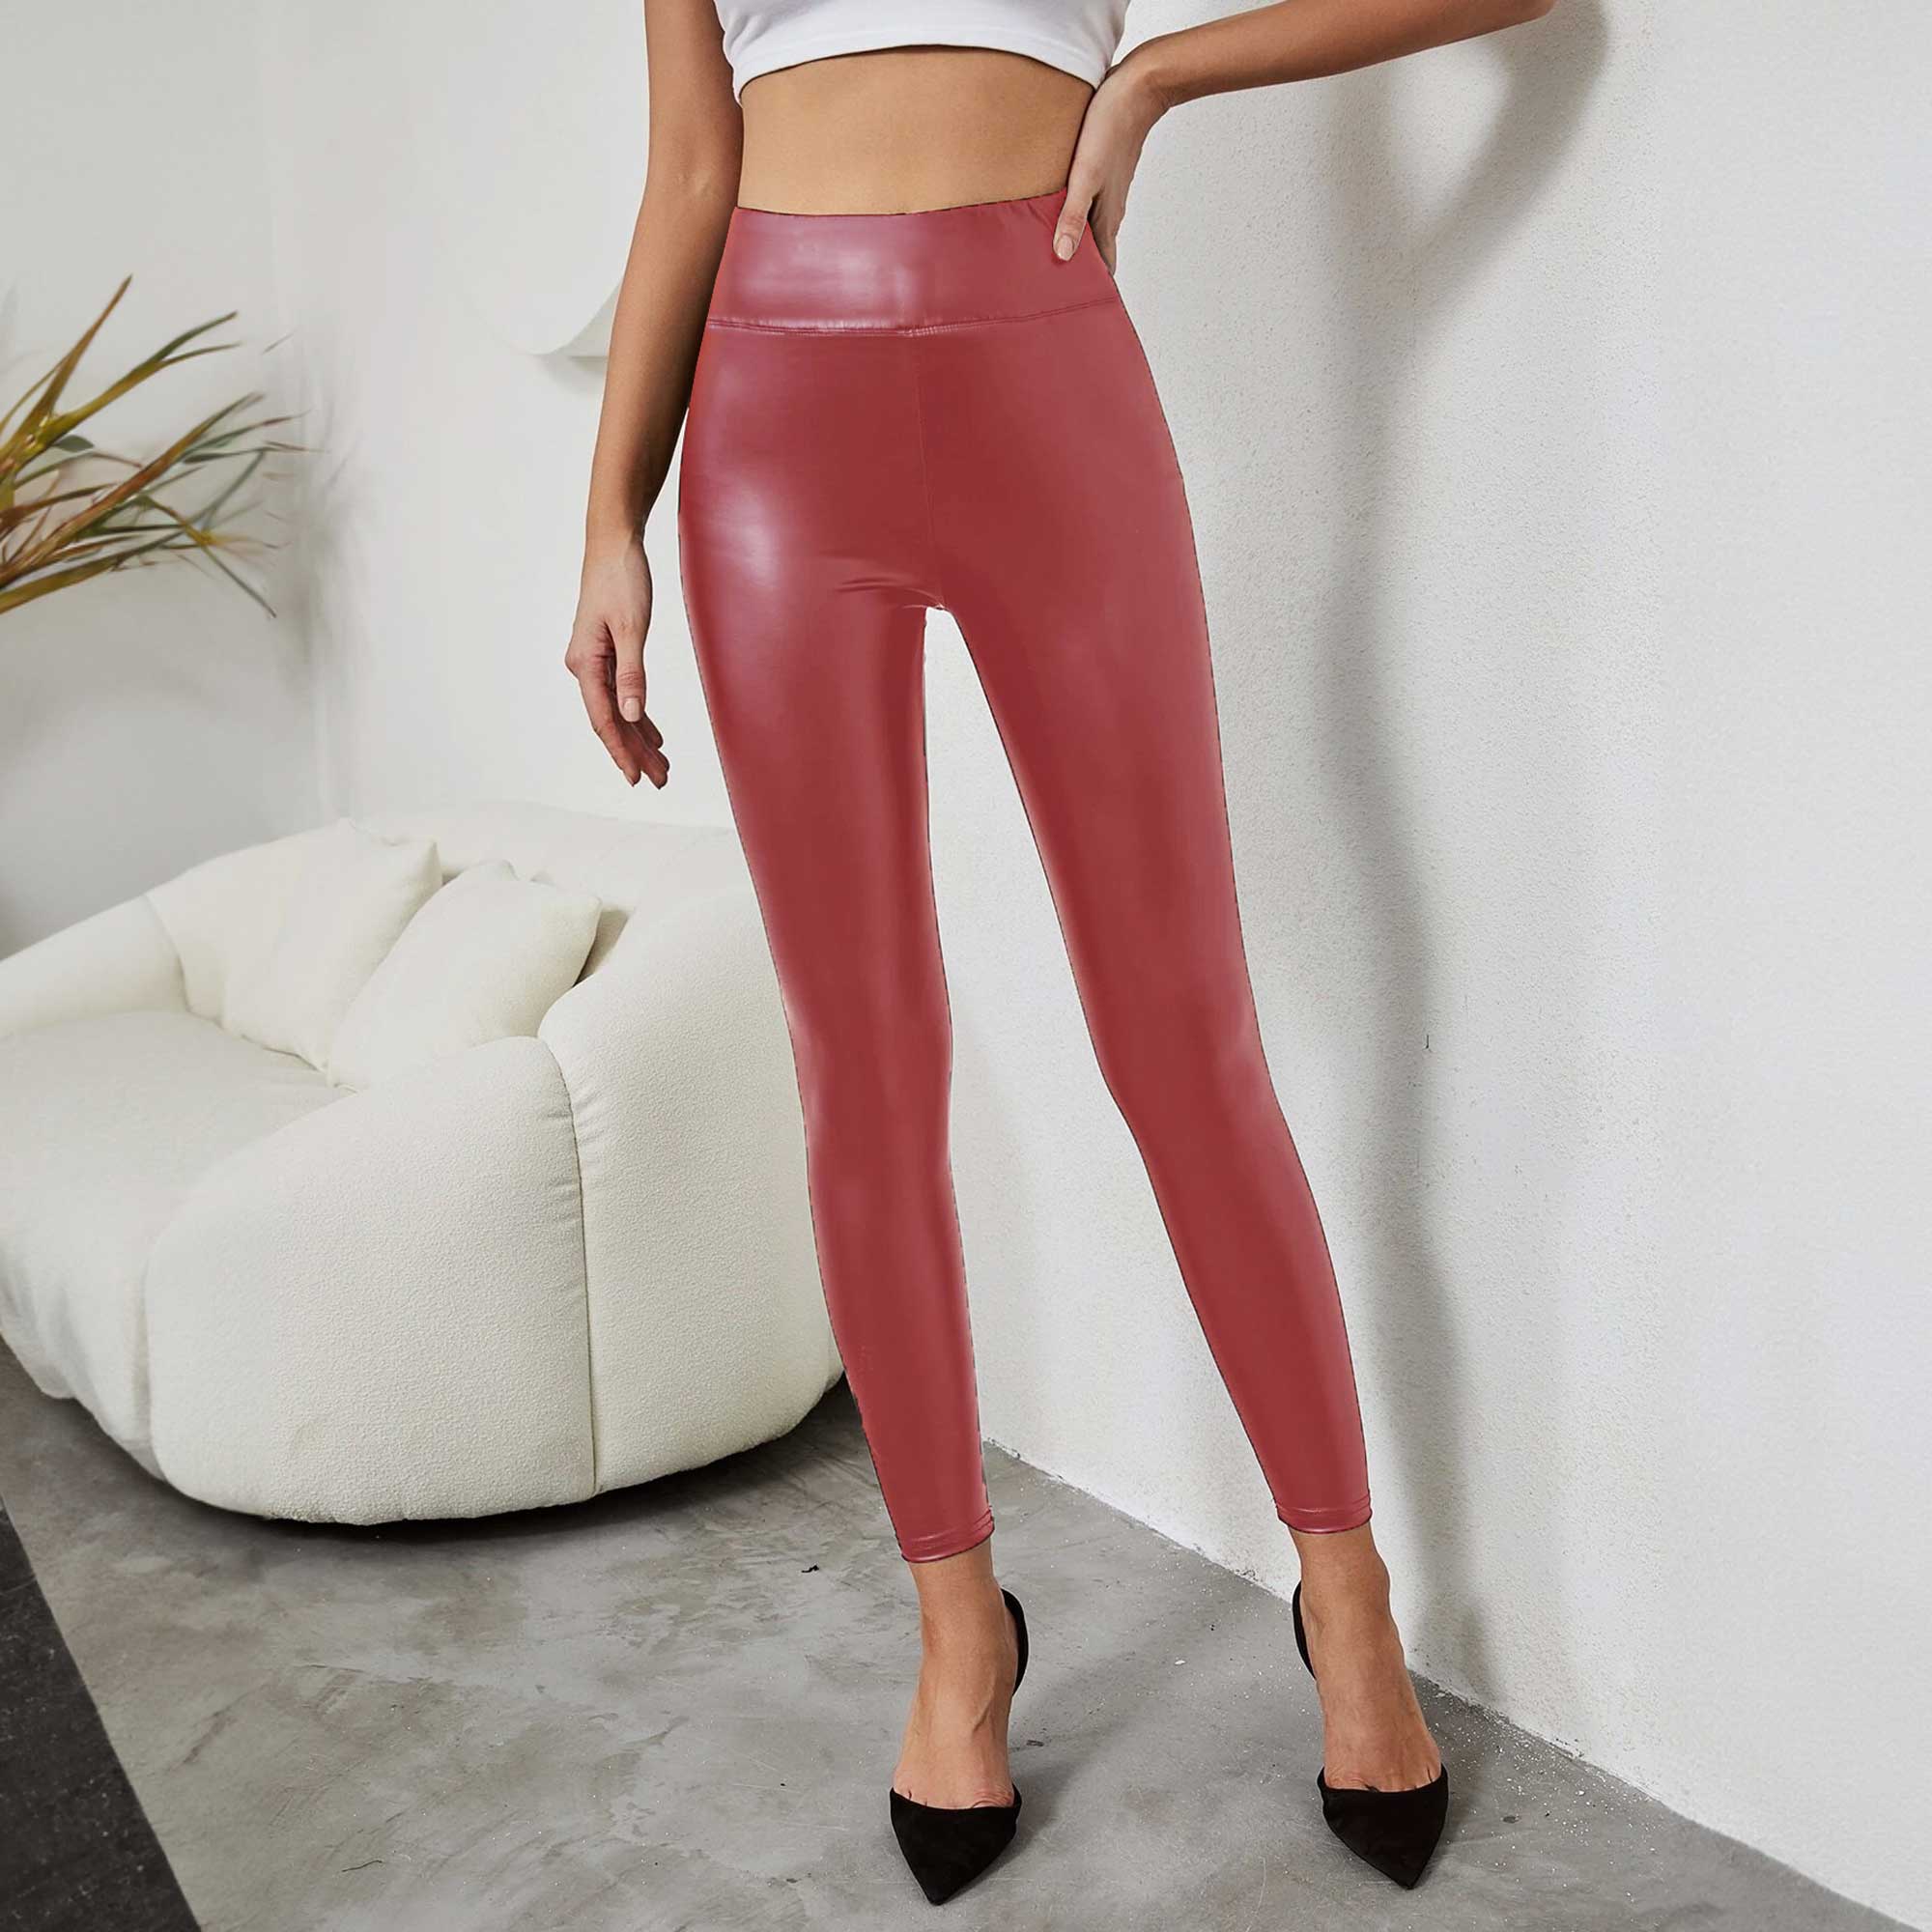 Revolve Skinny Leather Pants for Women | Mercari